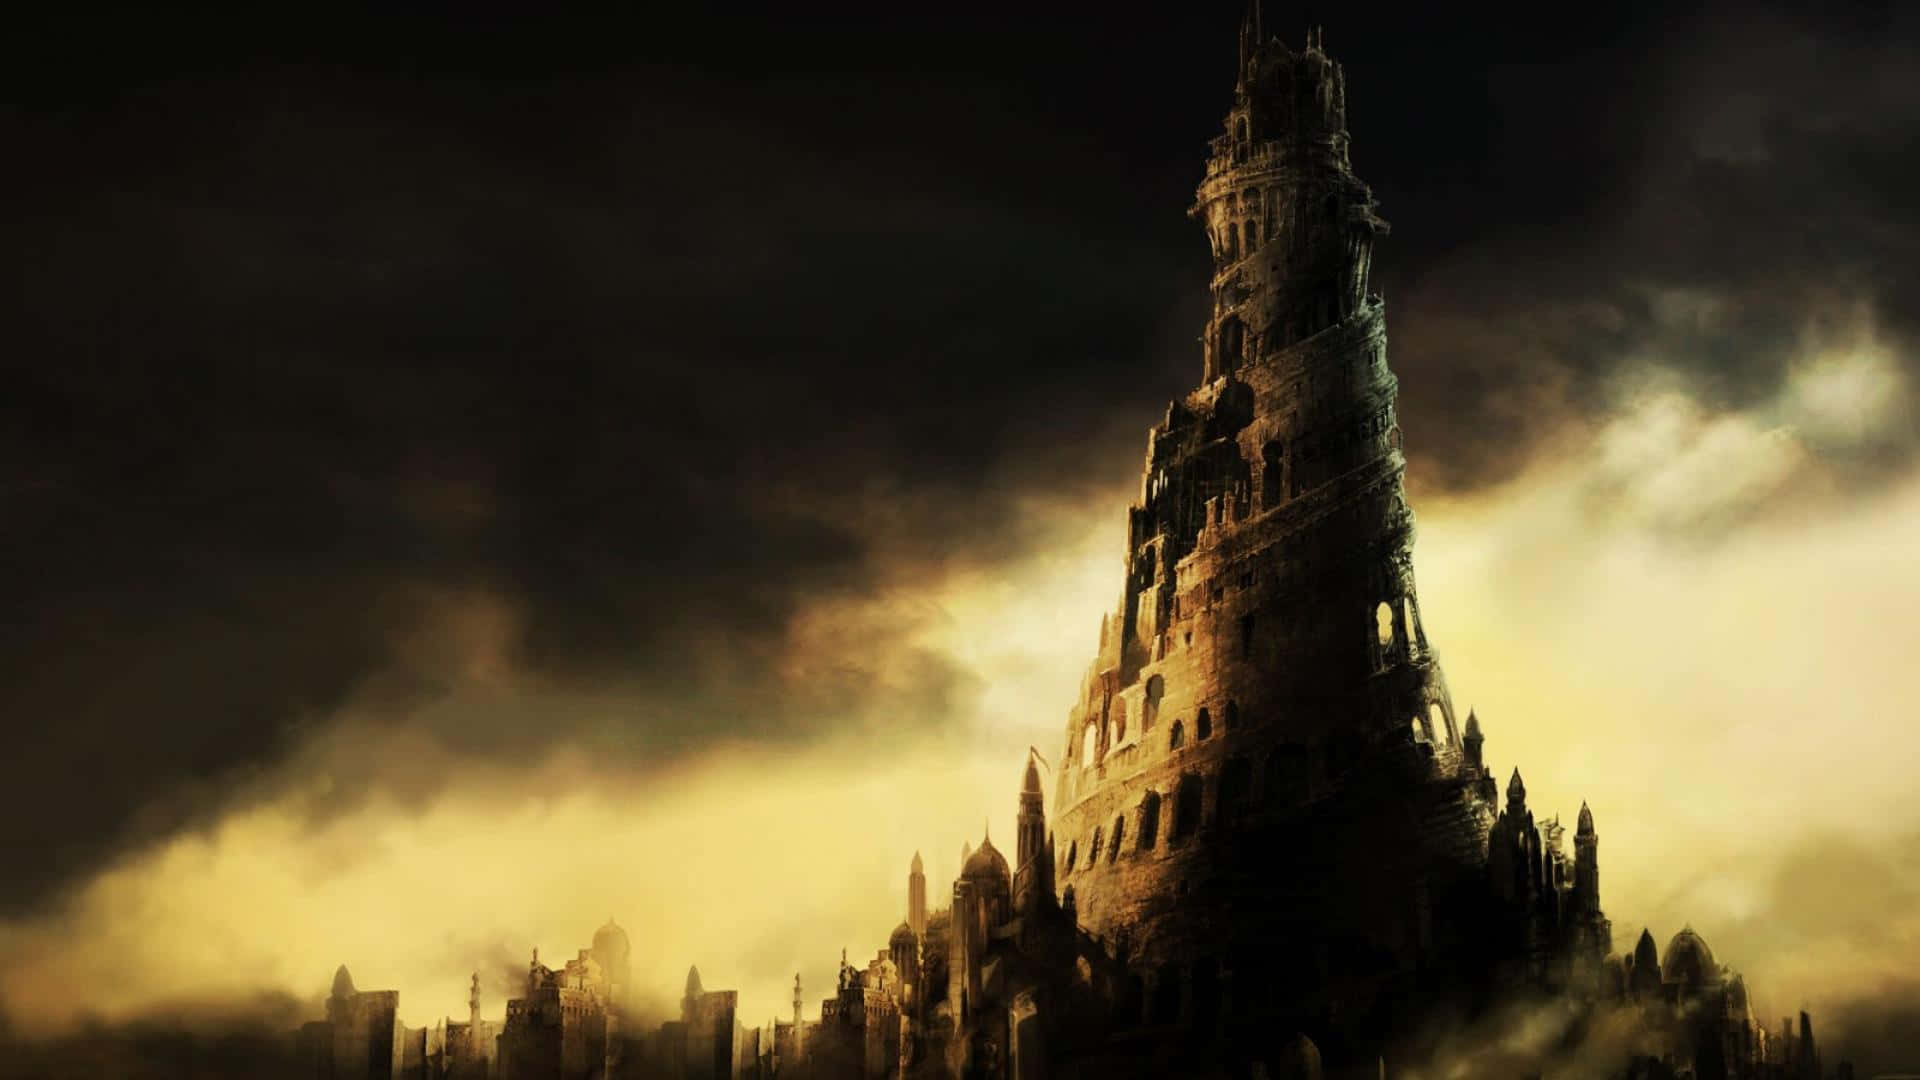 Dark Tower Rising in a Mystical Landscape Wallpaper